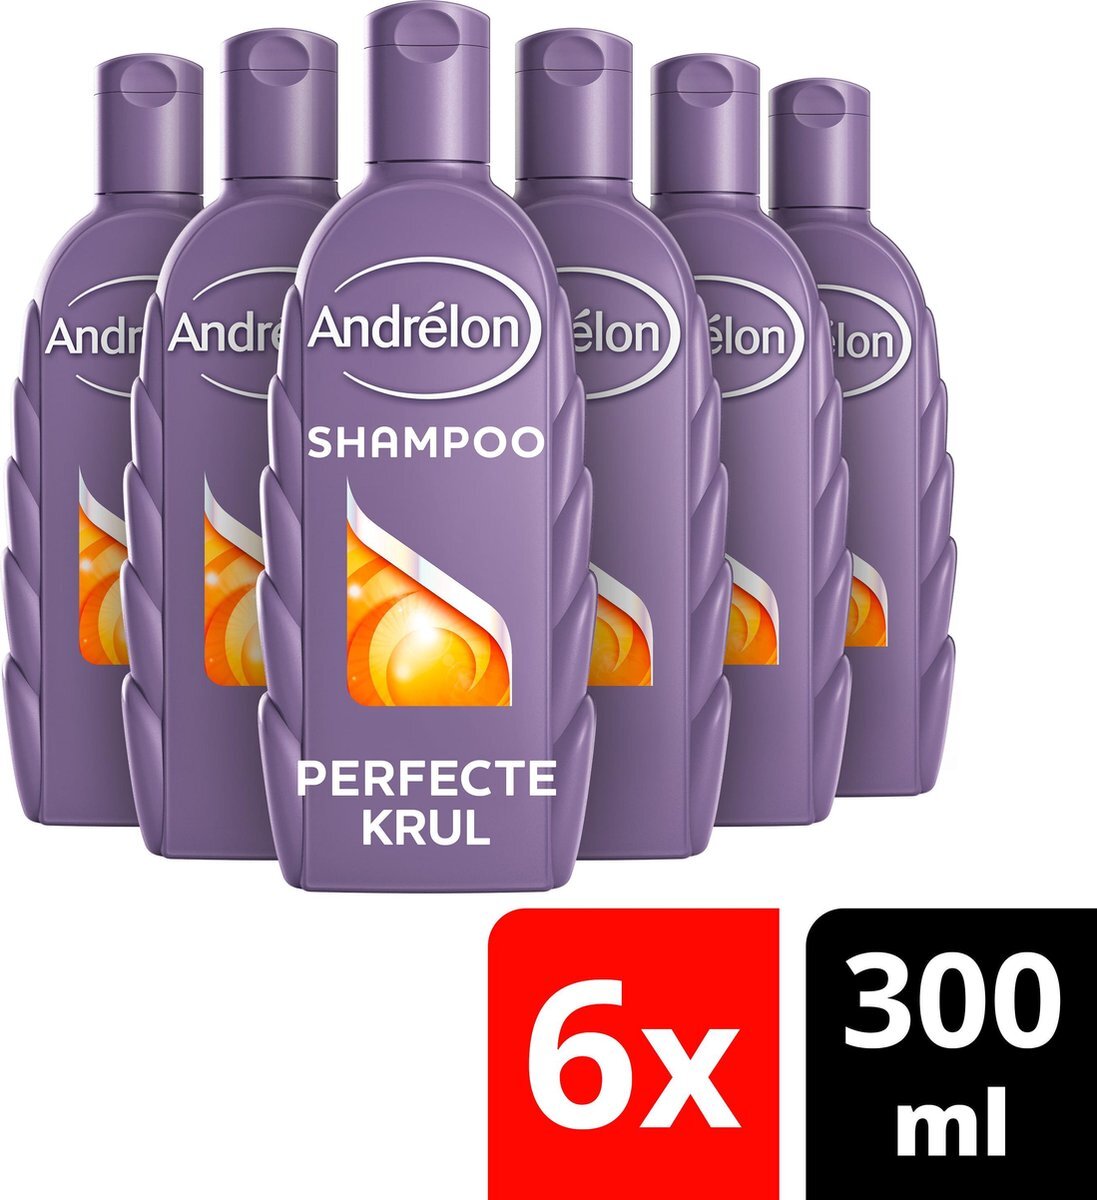 Andrélon Andrelon Shampoo Perfecte Krul 300ml 6x